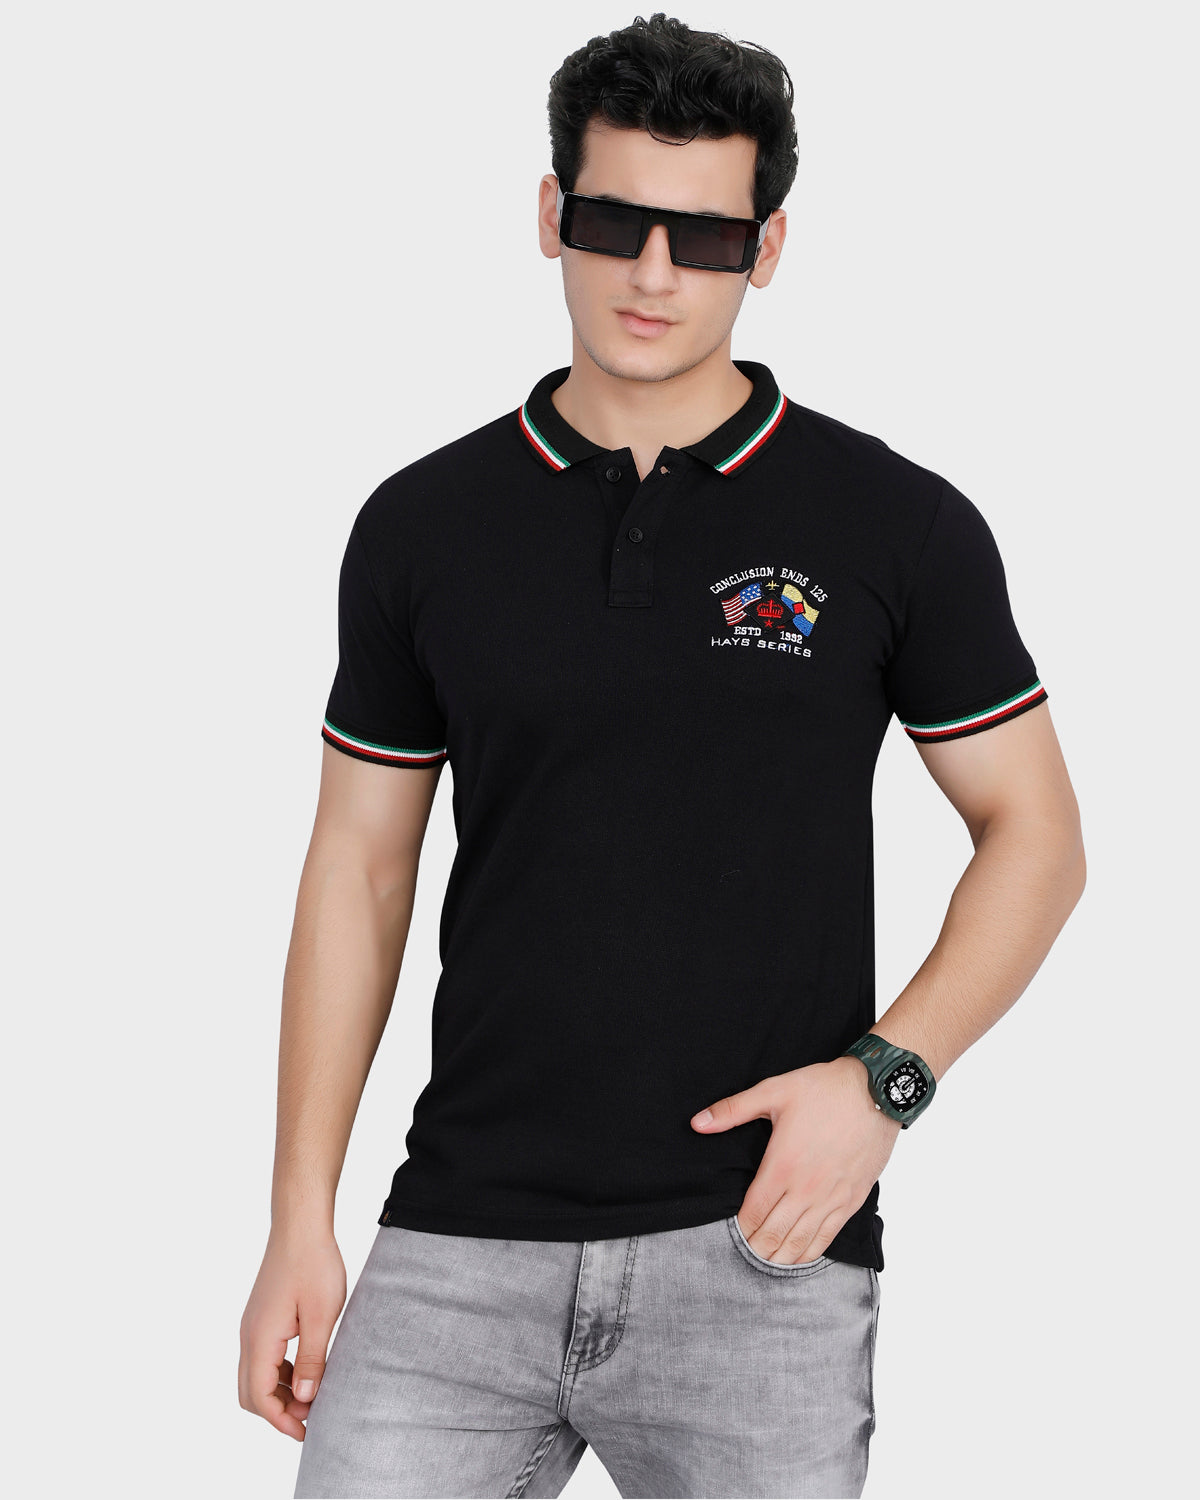 Men's Black Solid Cotton Polo Shirt